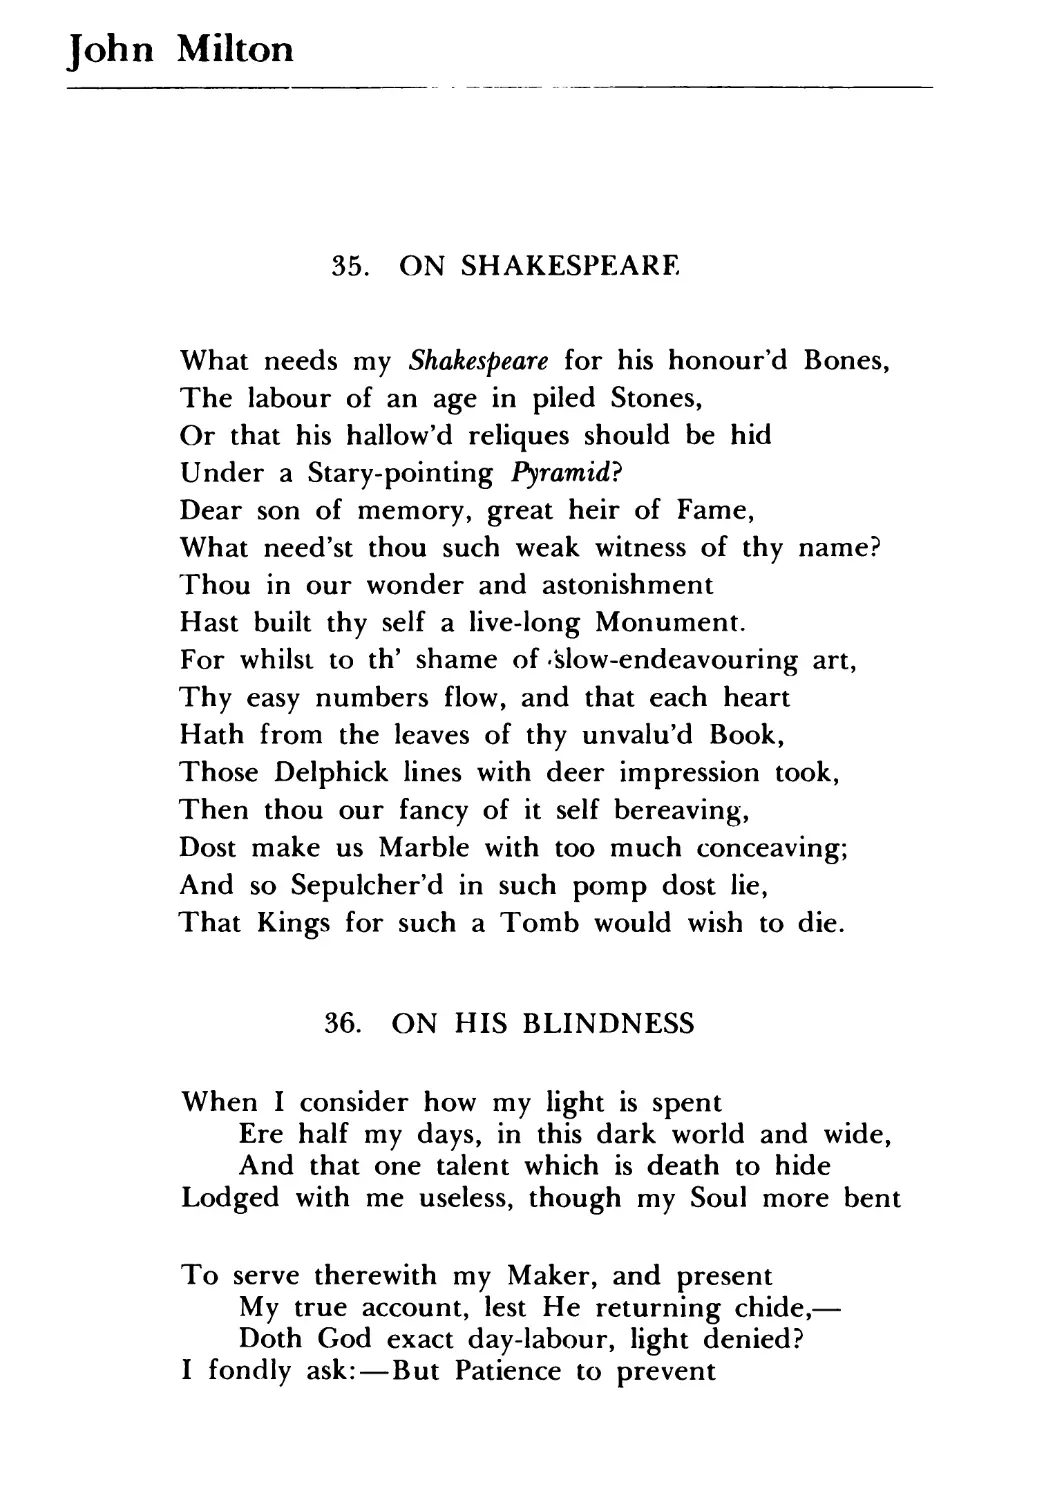 John Milton
36. On his Blindness